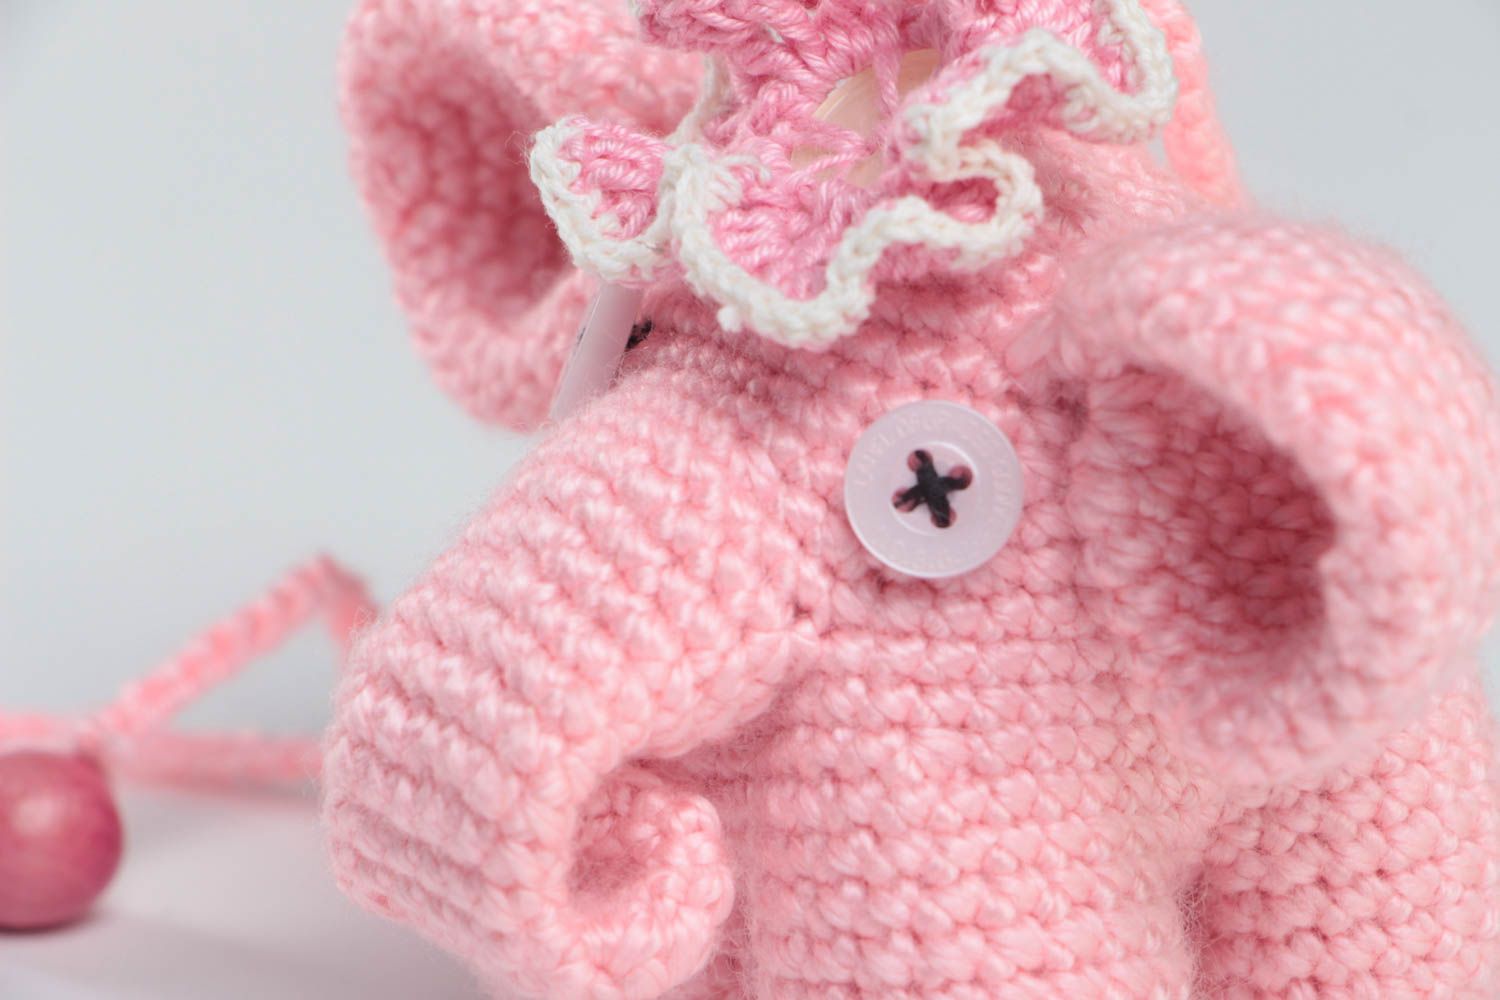 Soft crocheted toy pink elephant made of acrylic threads handmade interior decor photo 3